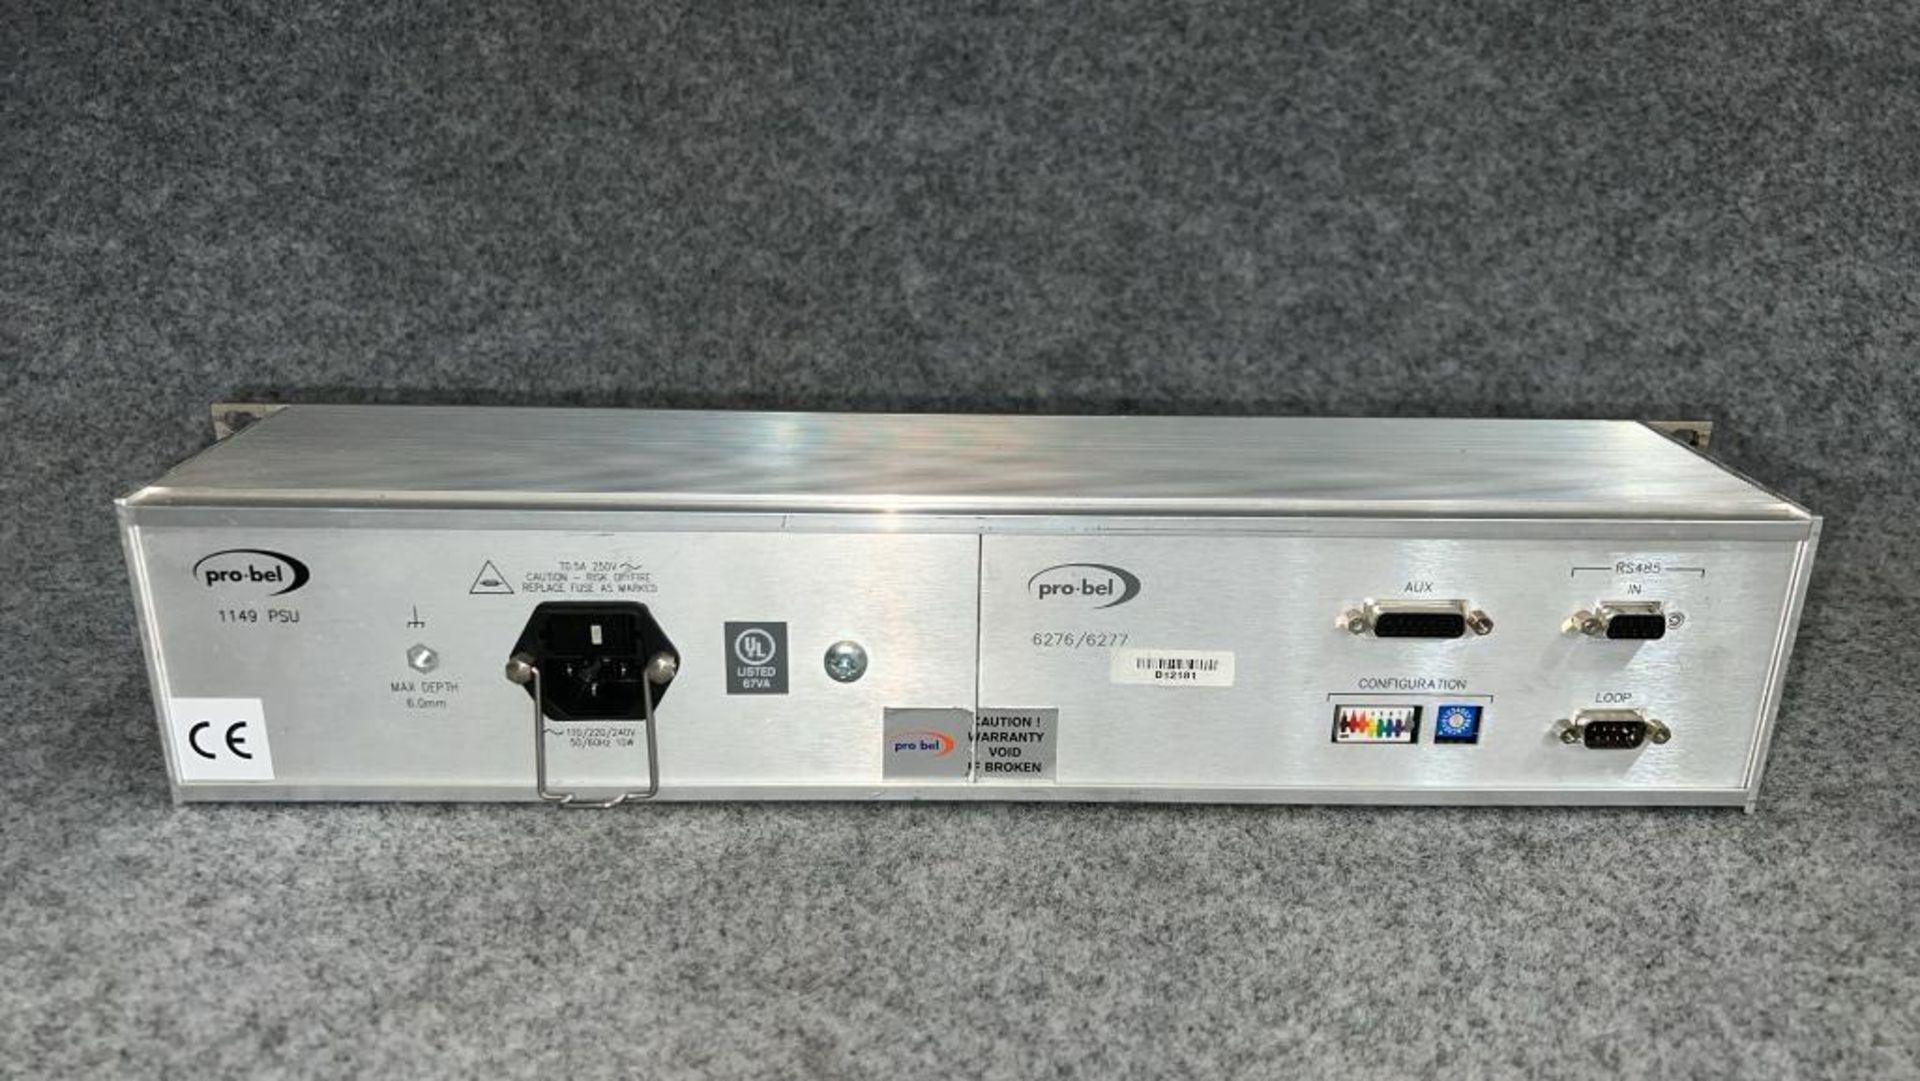 Pro Bel control panel 6276 - Image 5 of 8